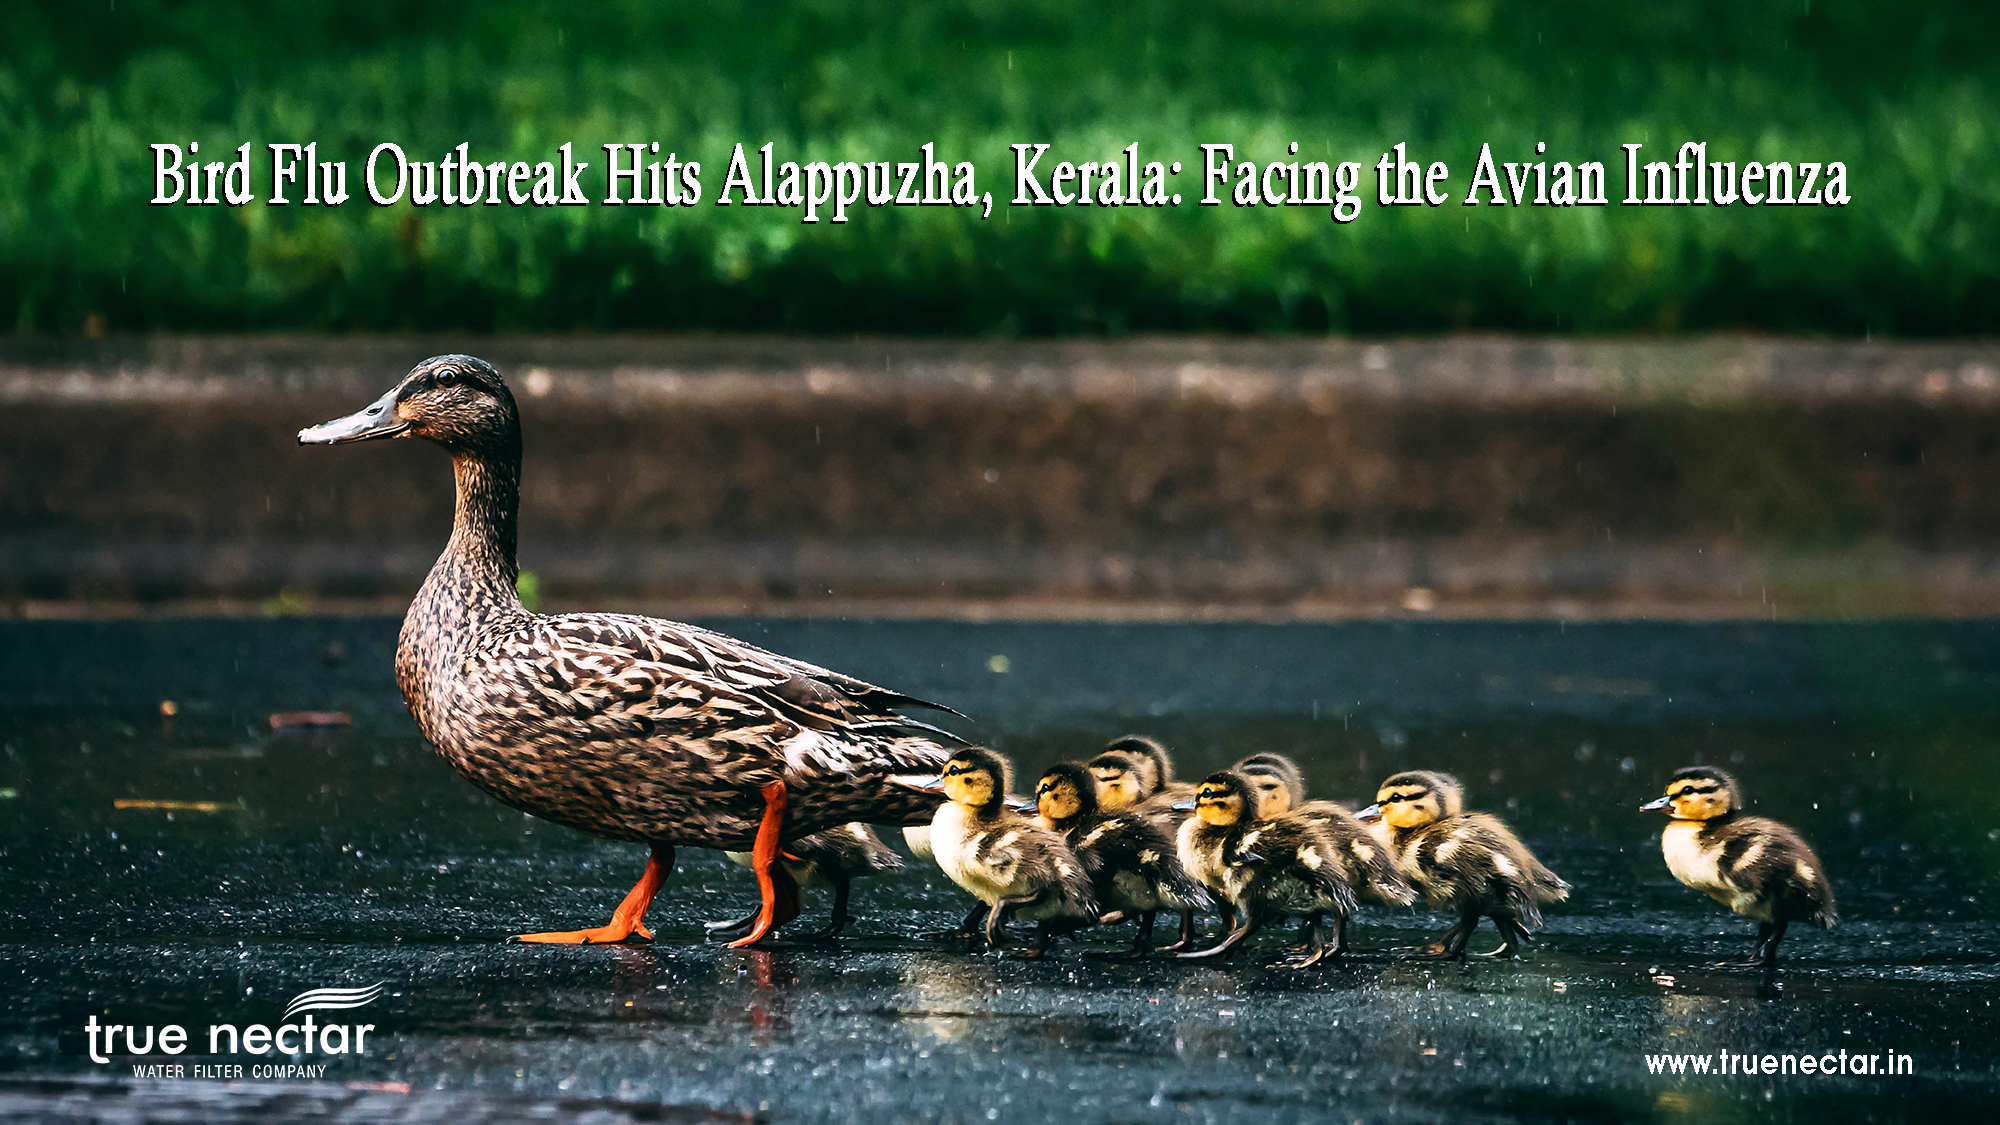 Bird Flu Outbreak Hits Alappuzha, Kerala - Facing the Avian Influenza